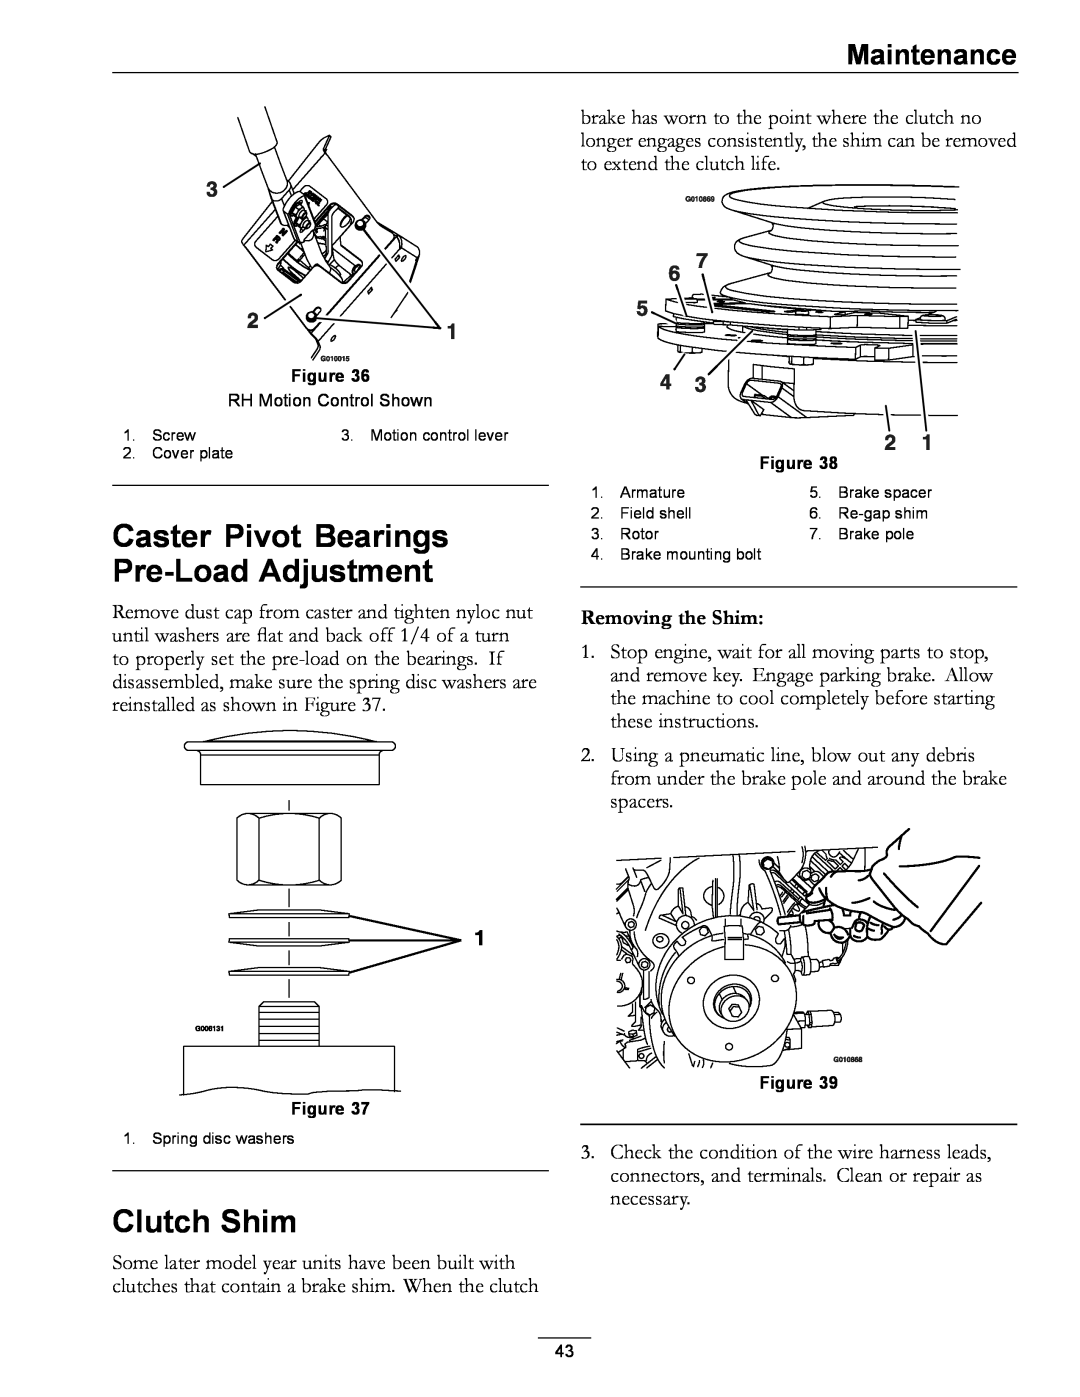 Exmark 4500-507 manual Caster Pivot Bearings Pre-Load Adjustment, Clutch Shim, Removing the Shim, Maintenance 